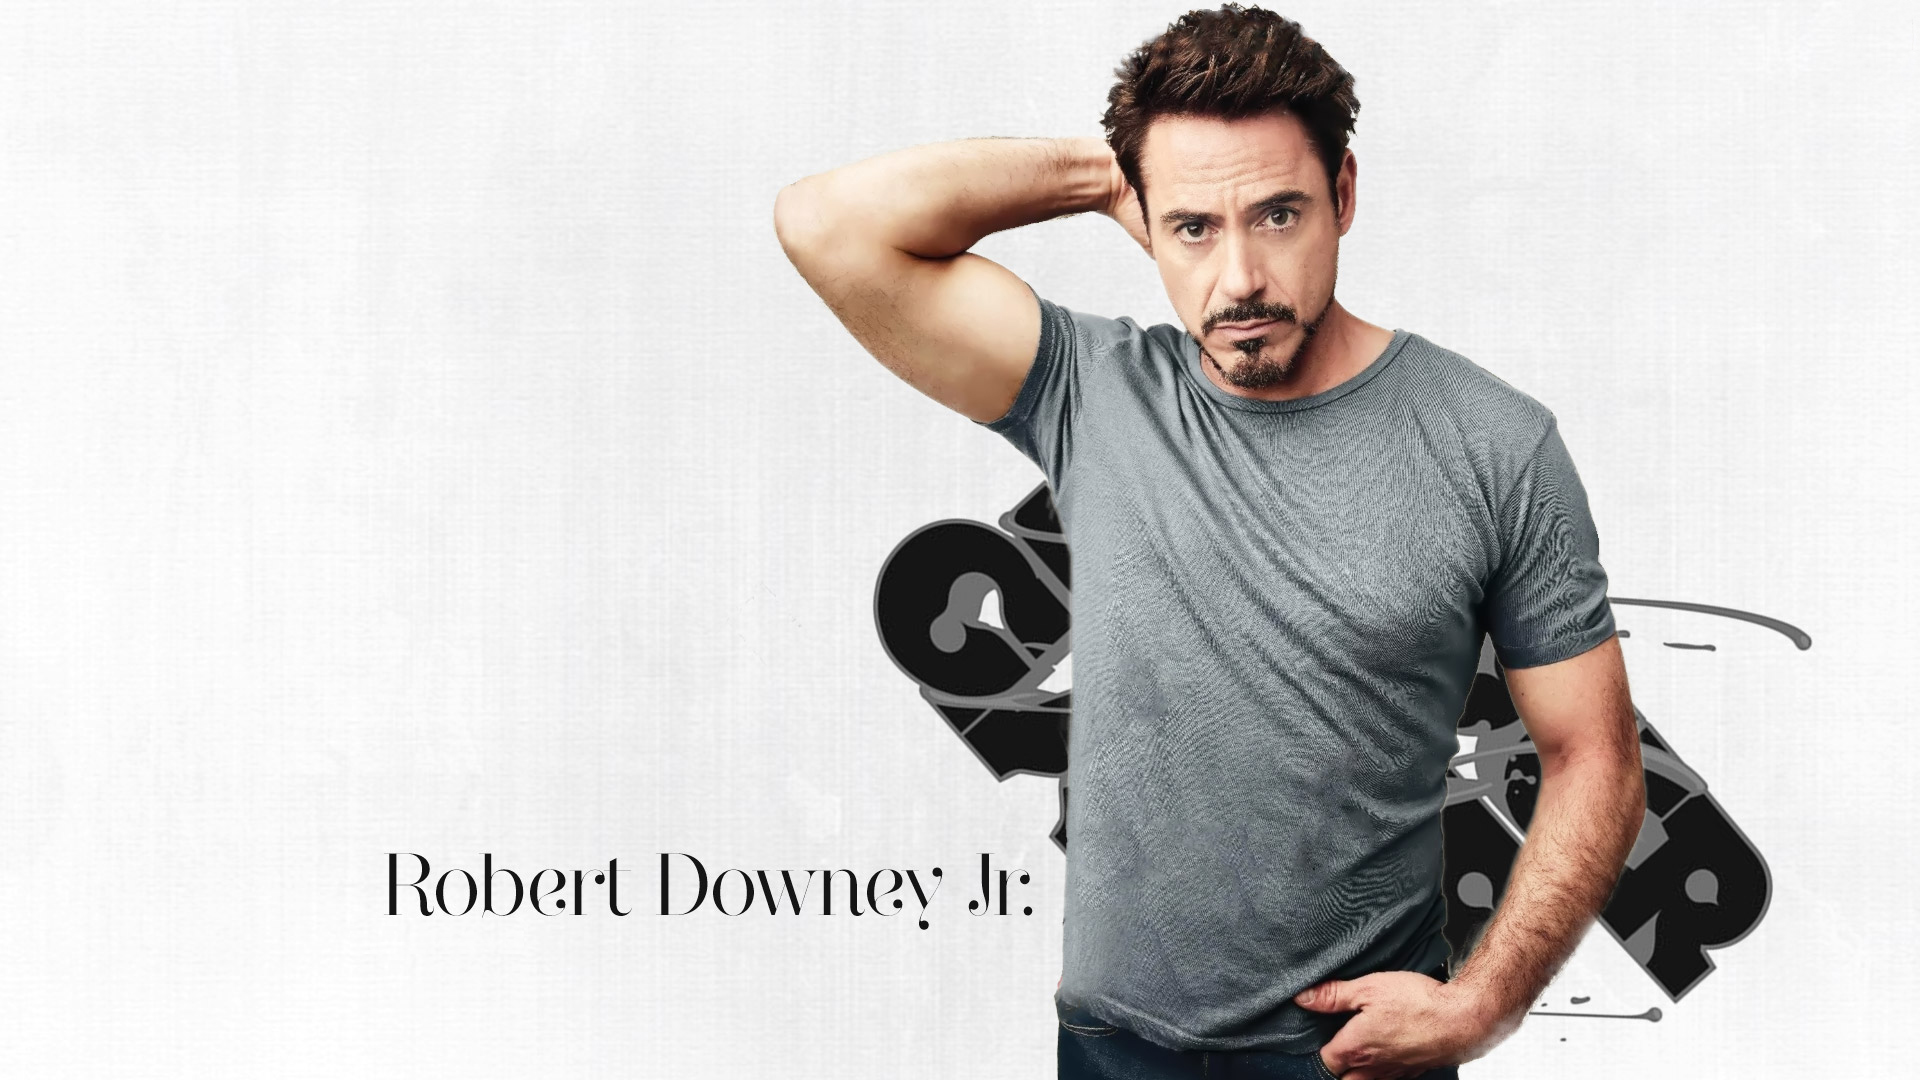 Robert Downey Jr Wallpaper Background Image